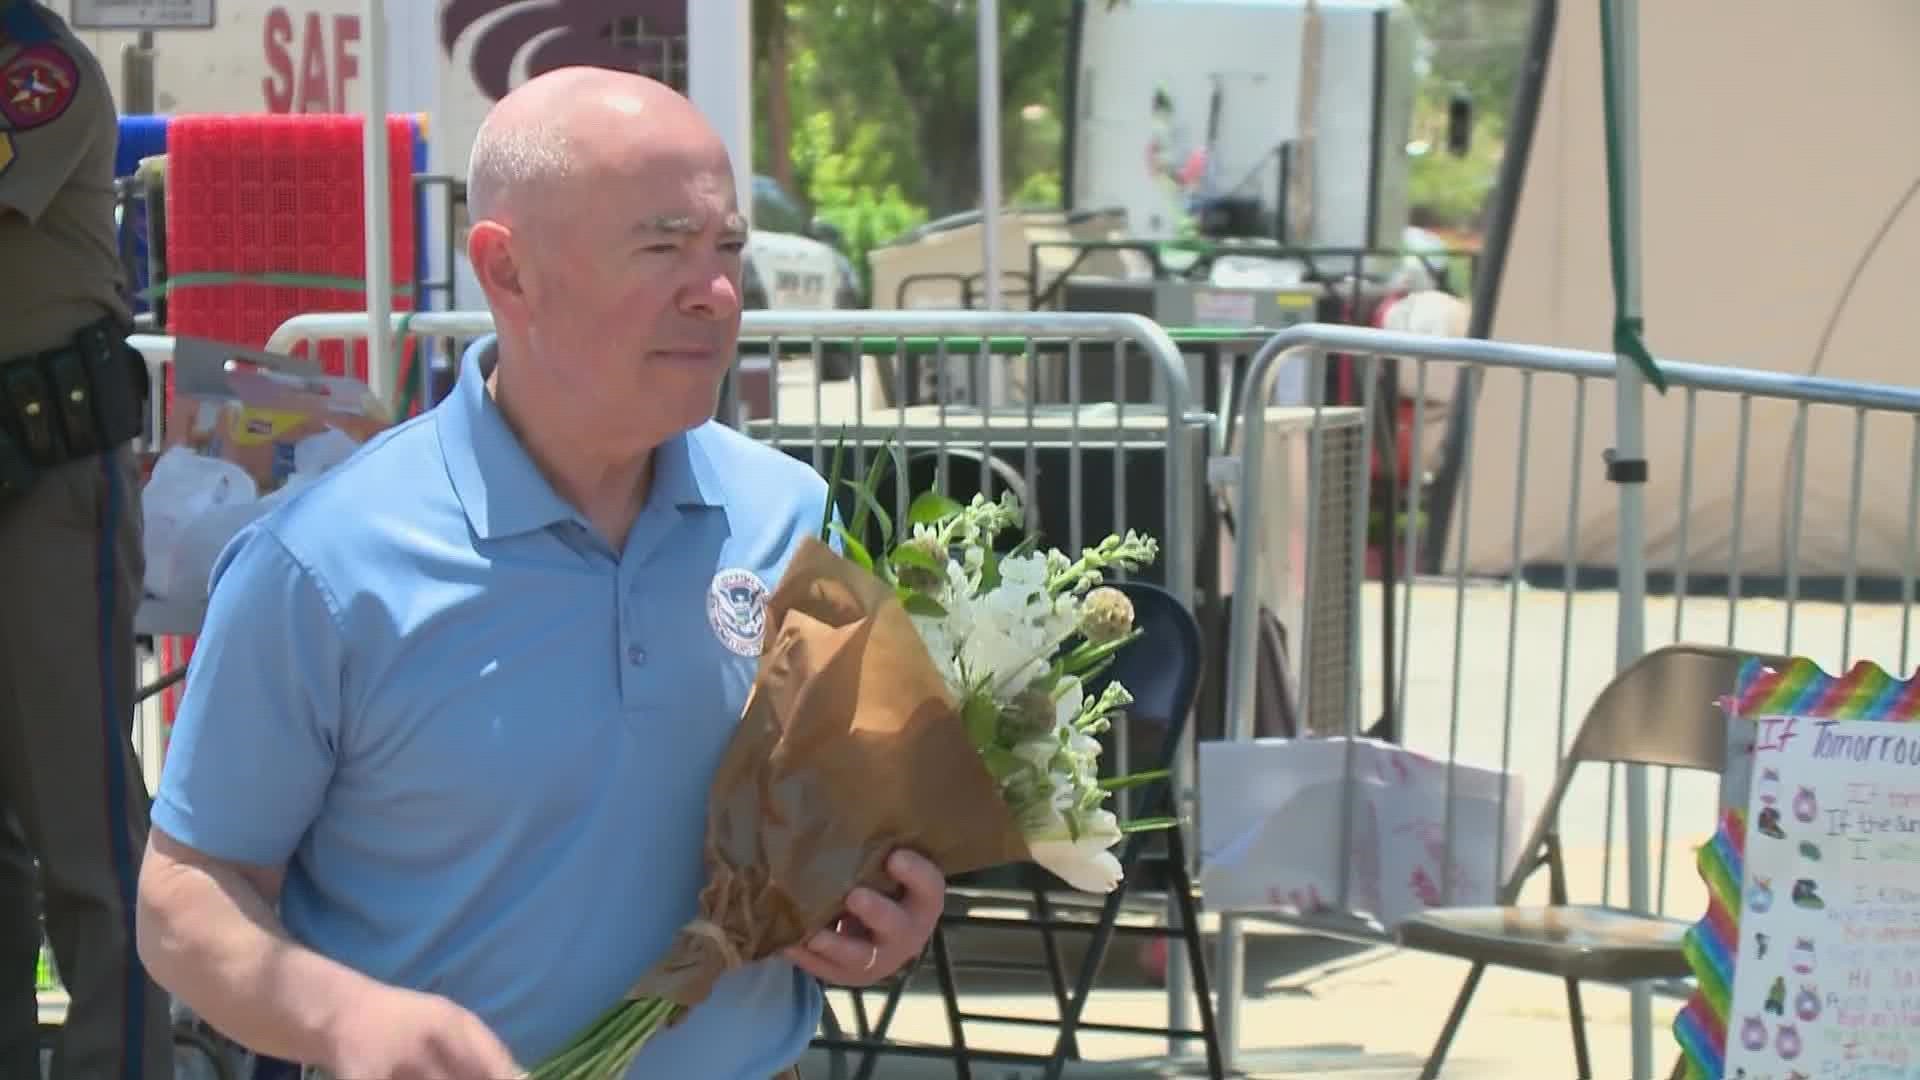 Secretary Alejandro Mayorkas left flowers at the memorial, and spoke to State Senator Roland Gutierrez.